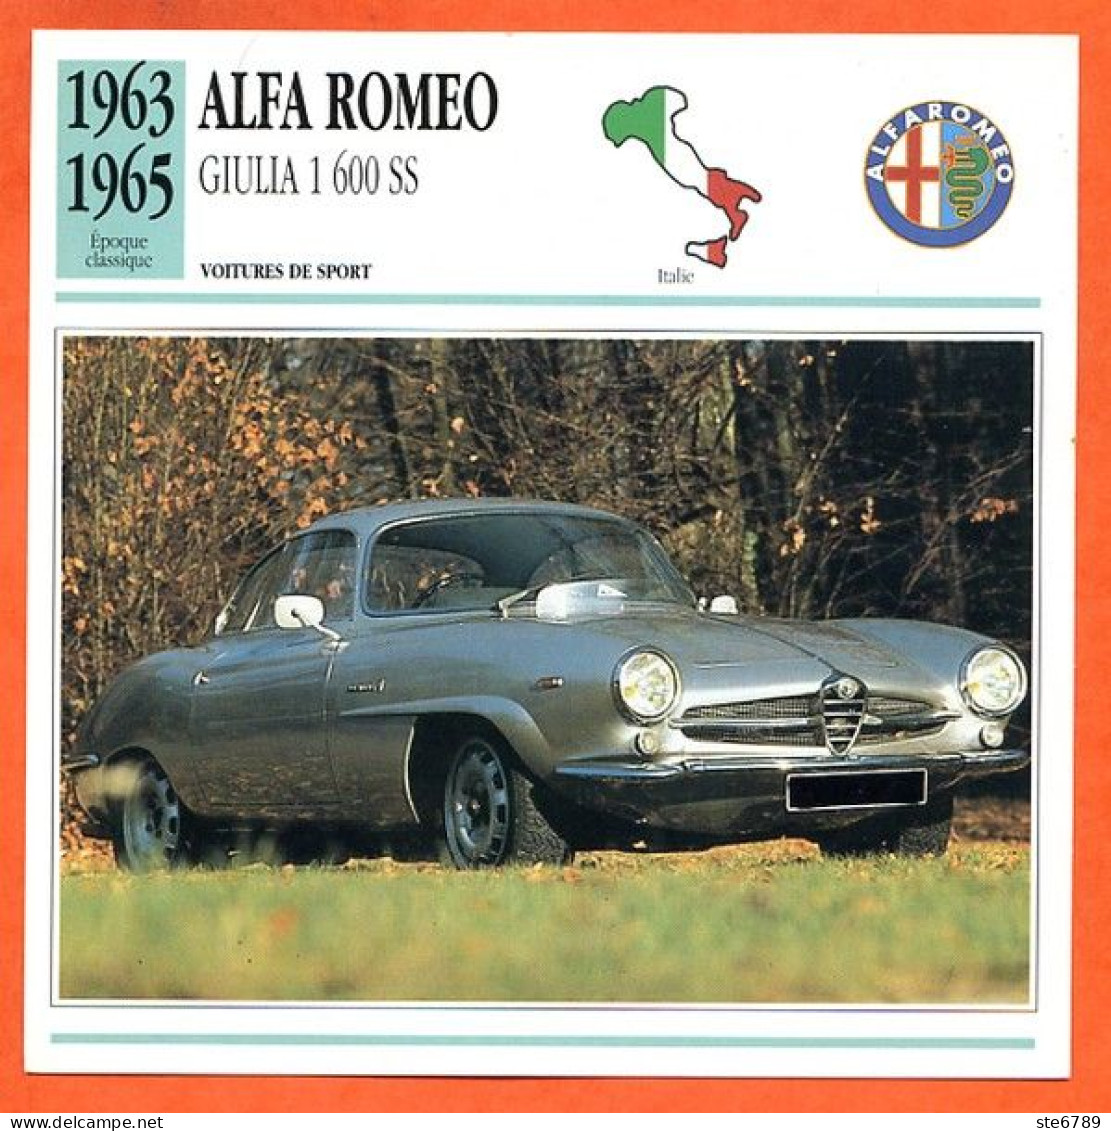 ALFA ROMEO GIULIA 1600 S 1963 Voiture De Sport Italie Fiche Technique Automobile - Voitures